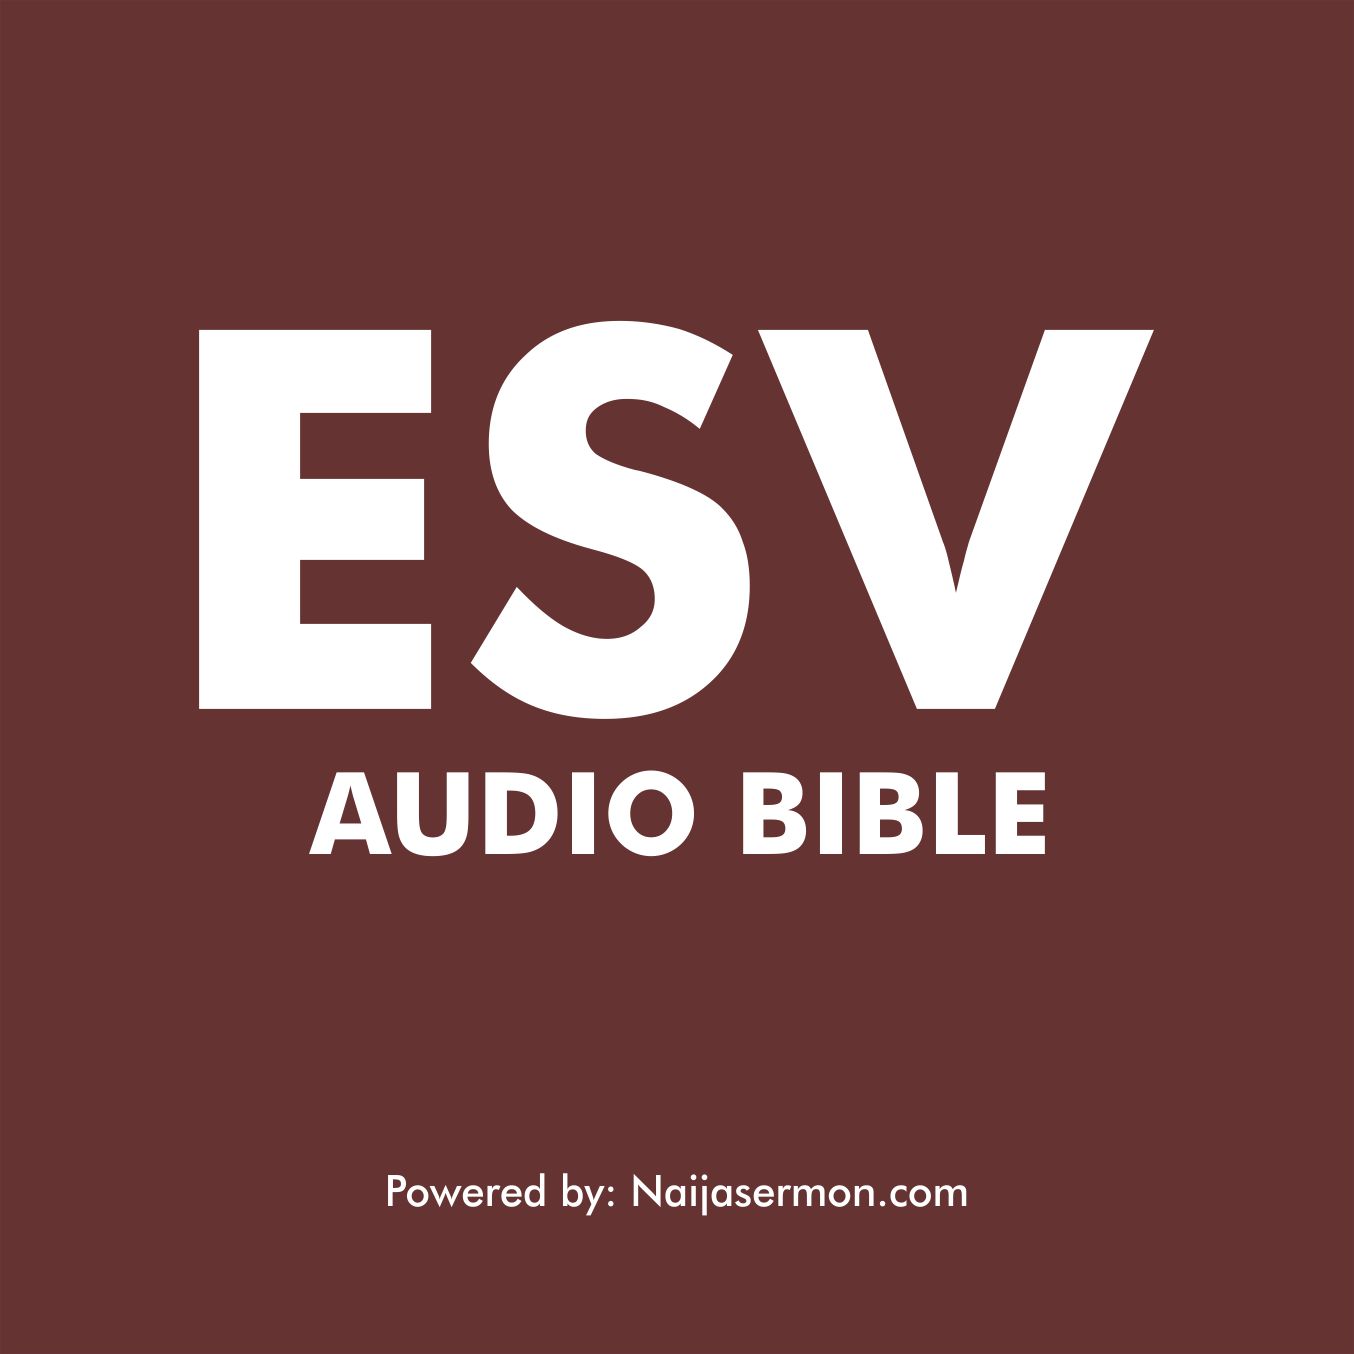 [Free] Download English Standard Version (ESV) Audio Bible MP3 - Dramatized 18